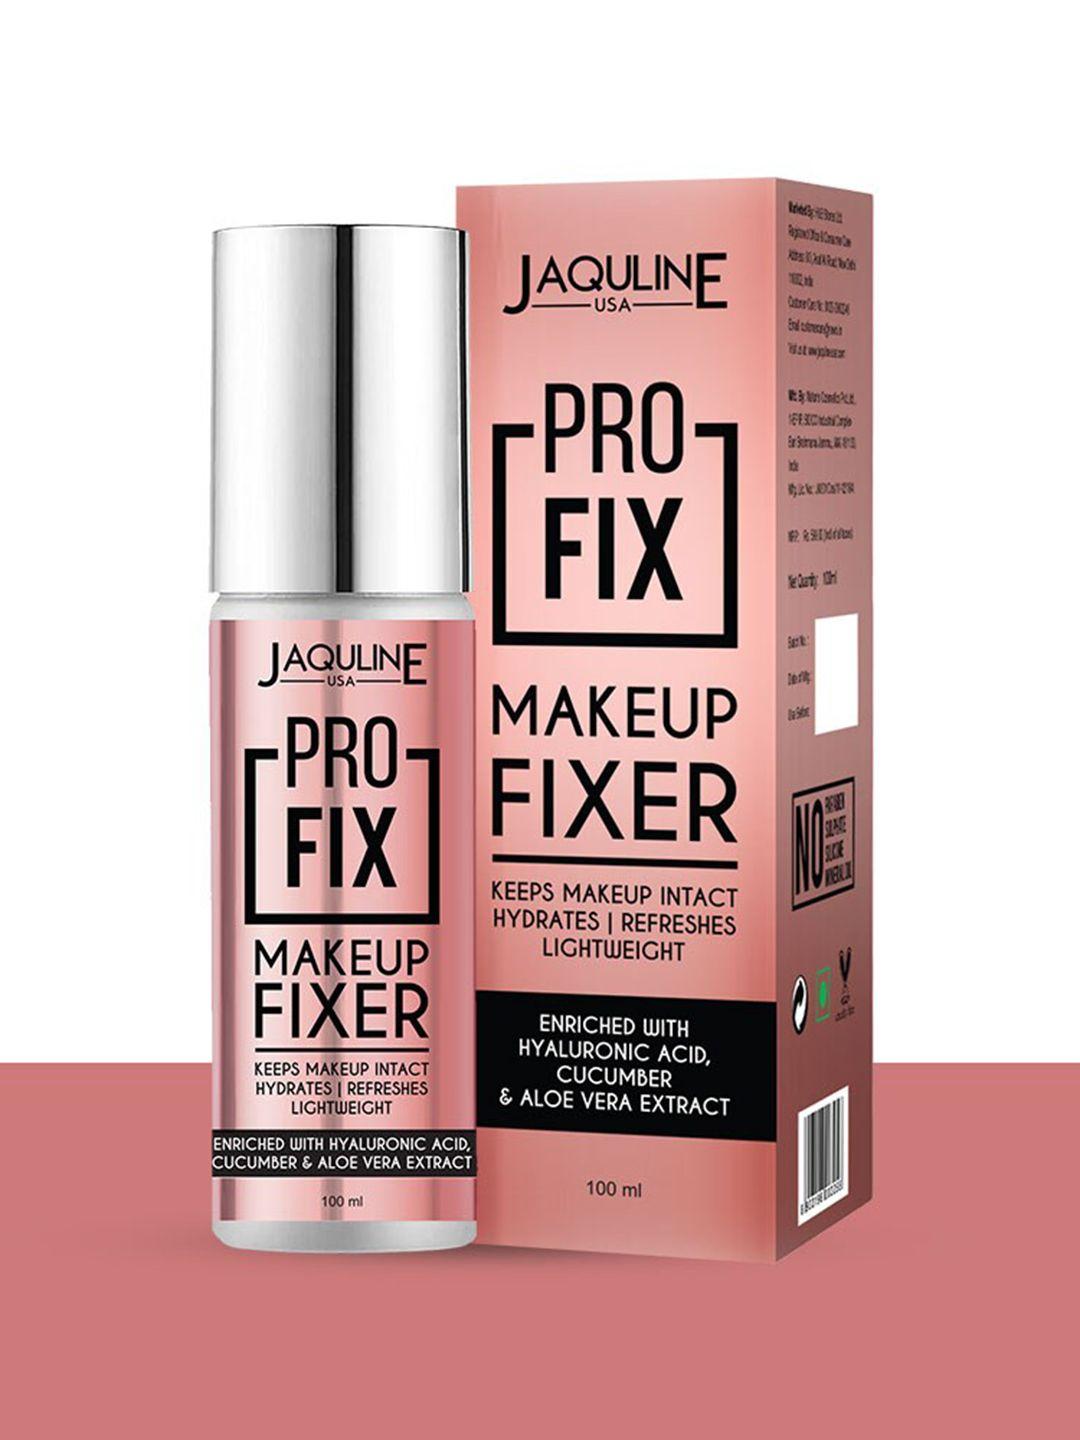 jaquline usa pro fix makeup fixer with ha, cucumber & aloe vera setting spray - 100 ml